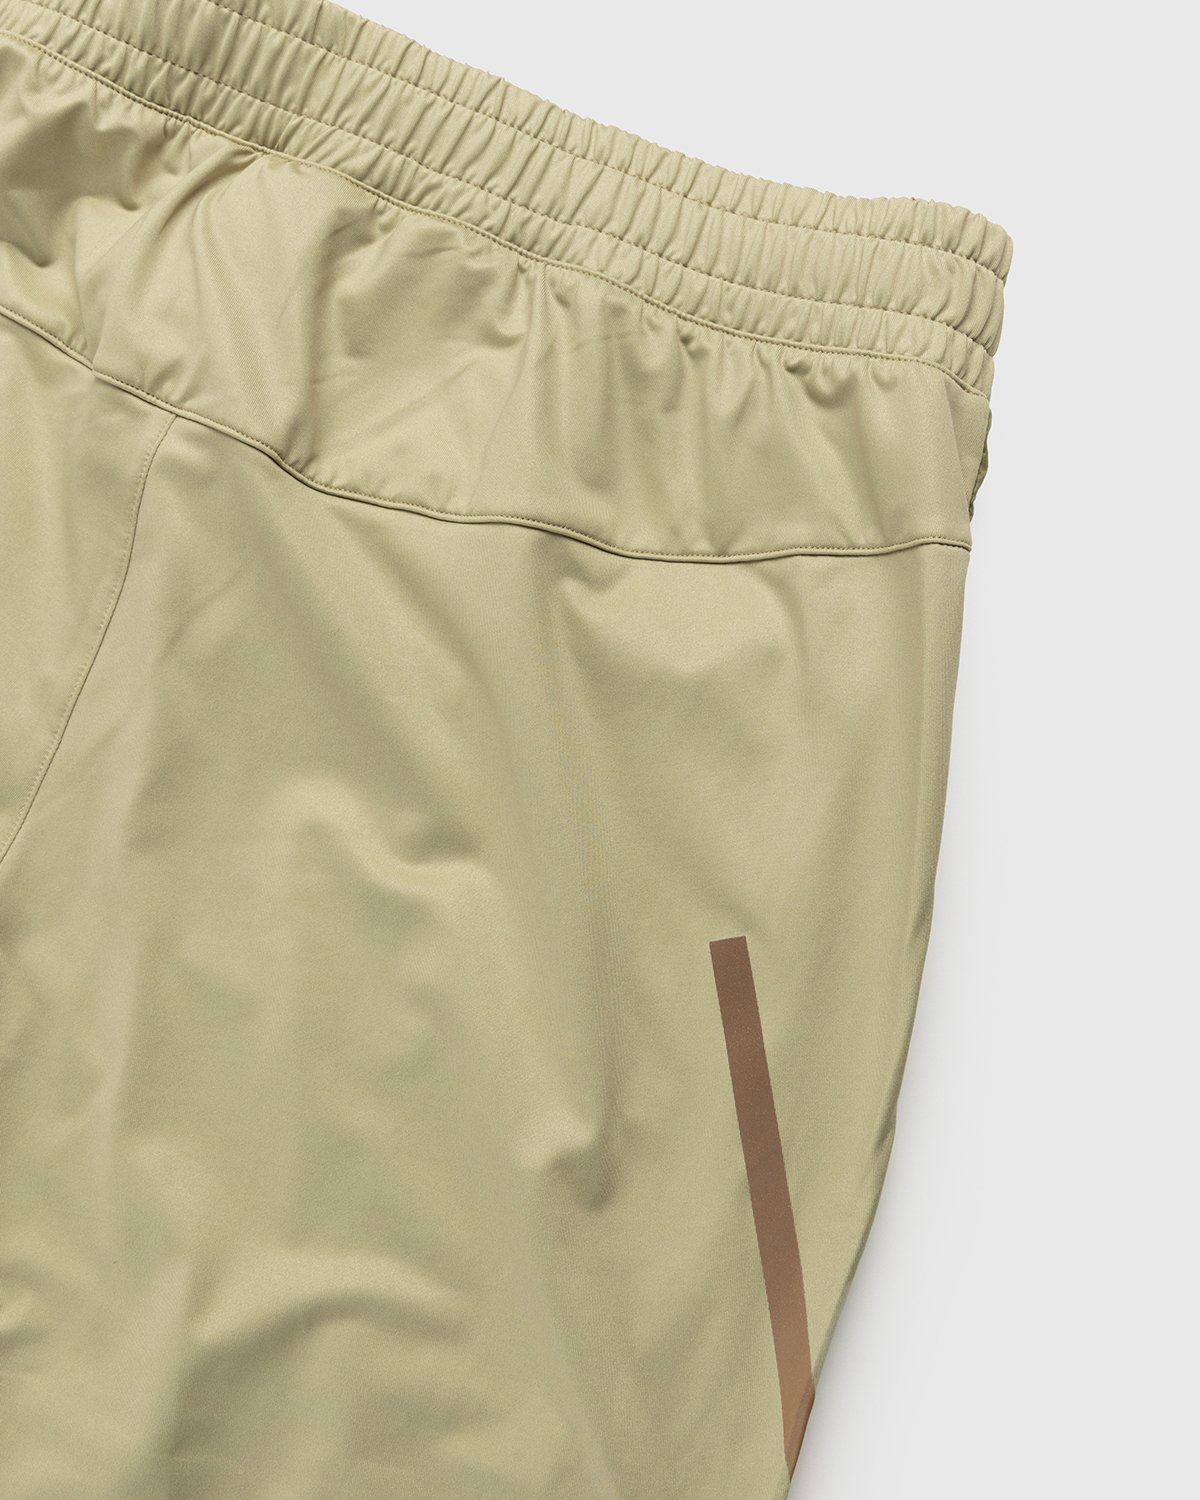 Loewe x On - Men's Technical Running Pants Gradient Khaki - Clothing - Green - Image 7